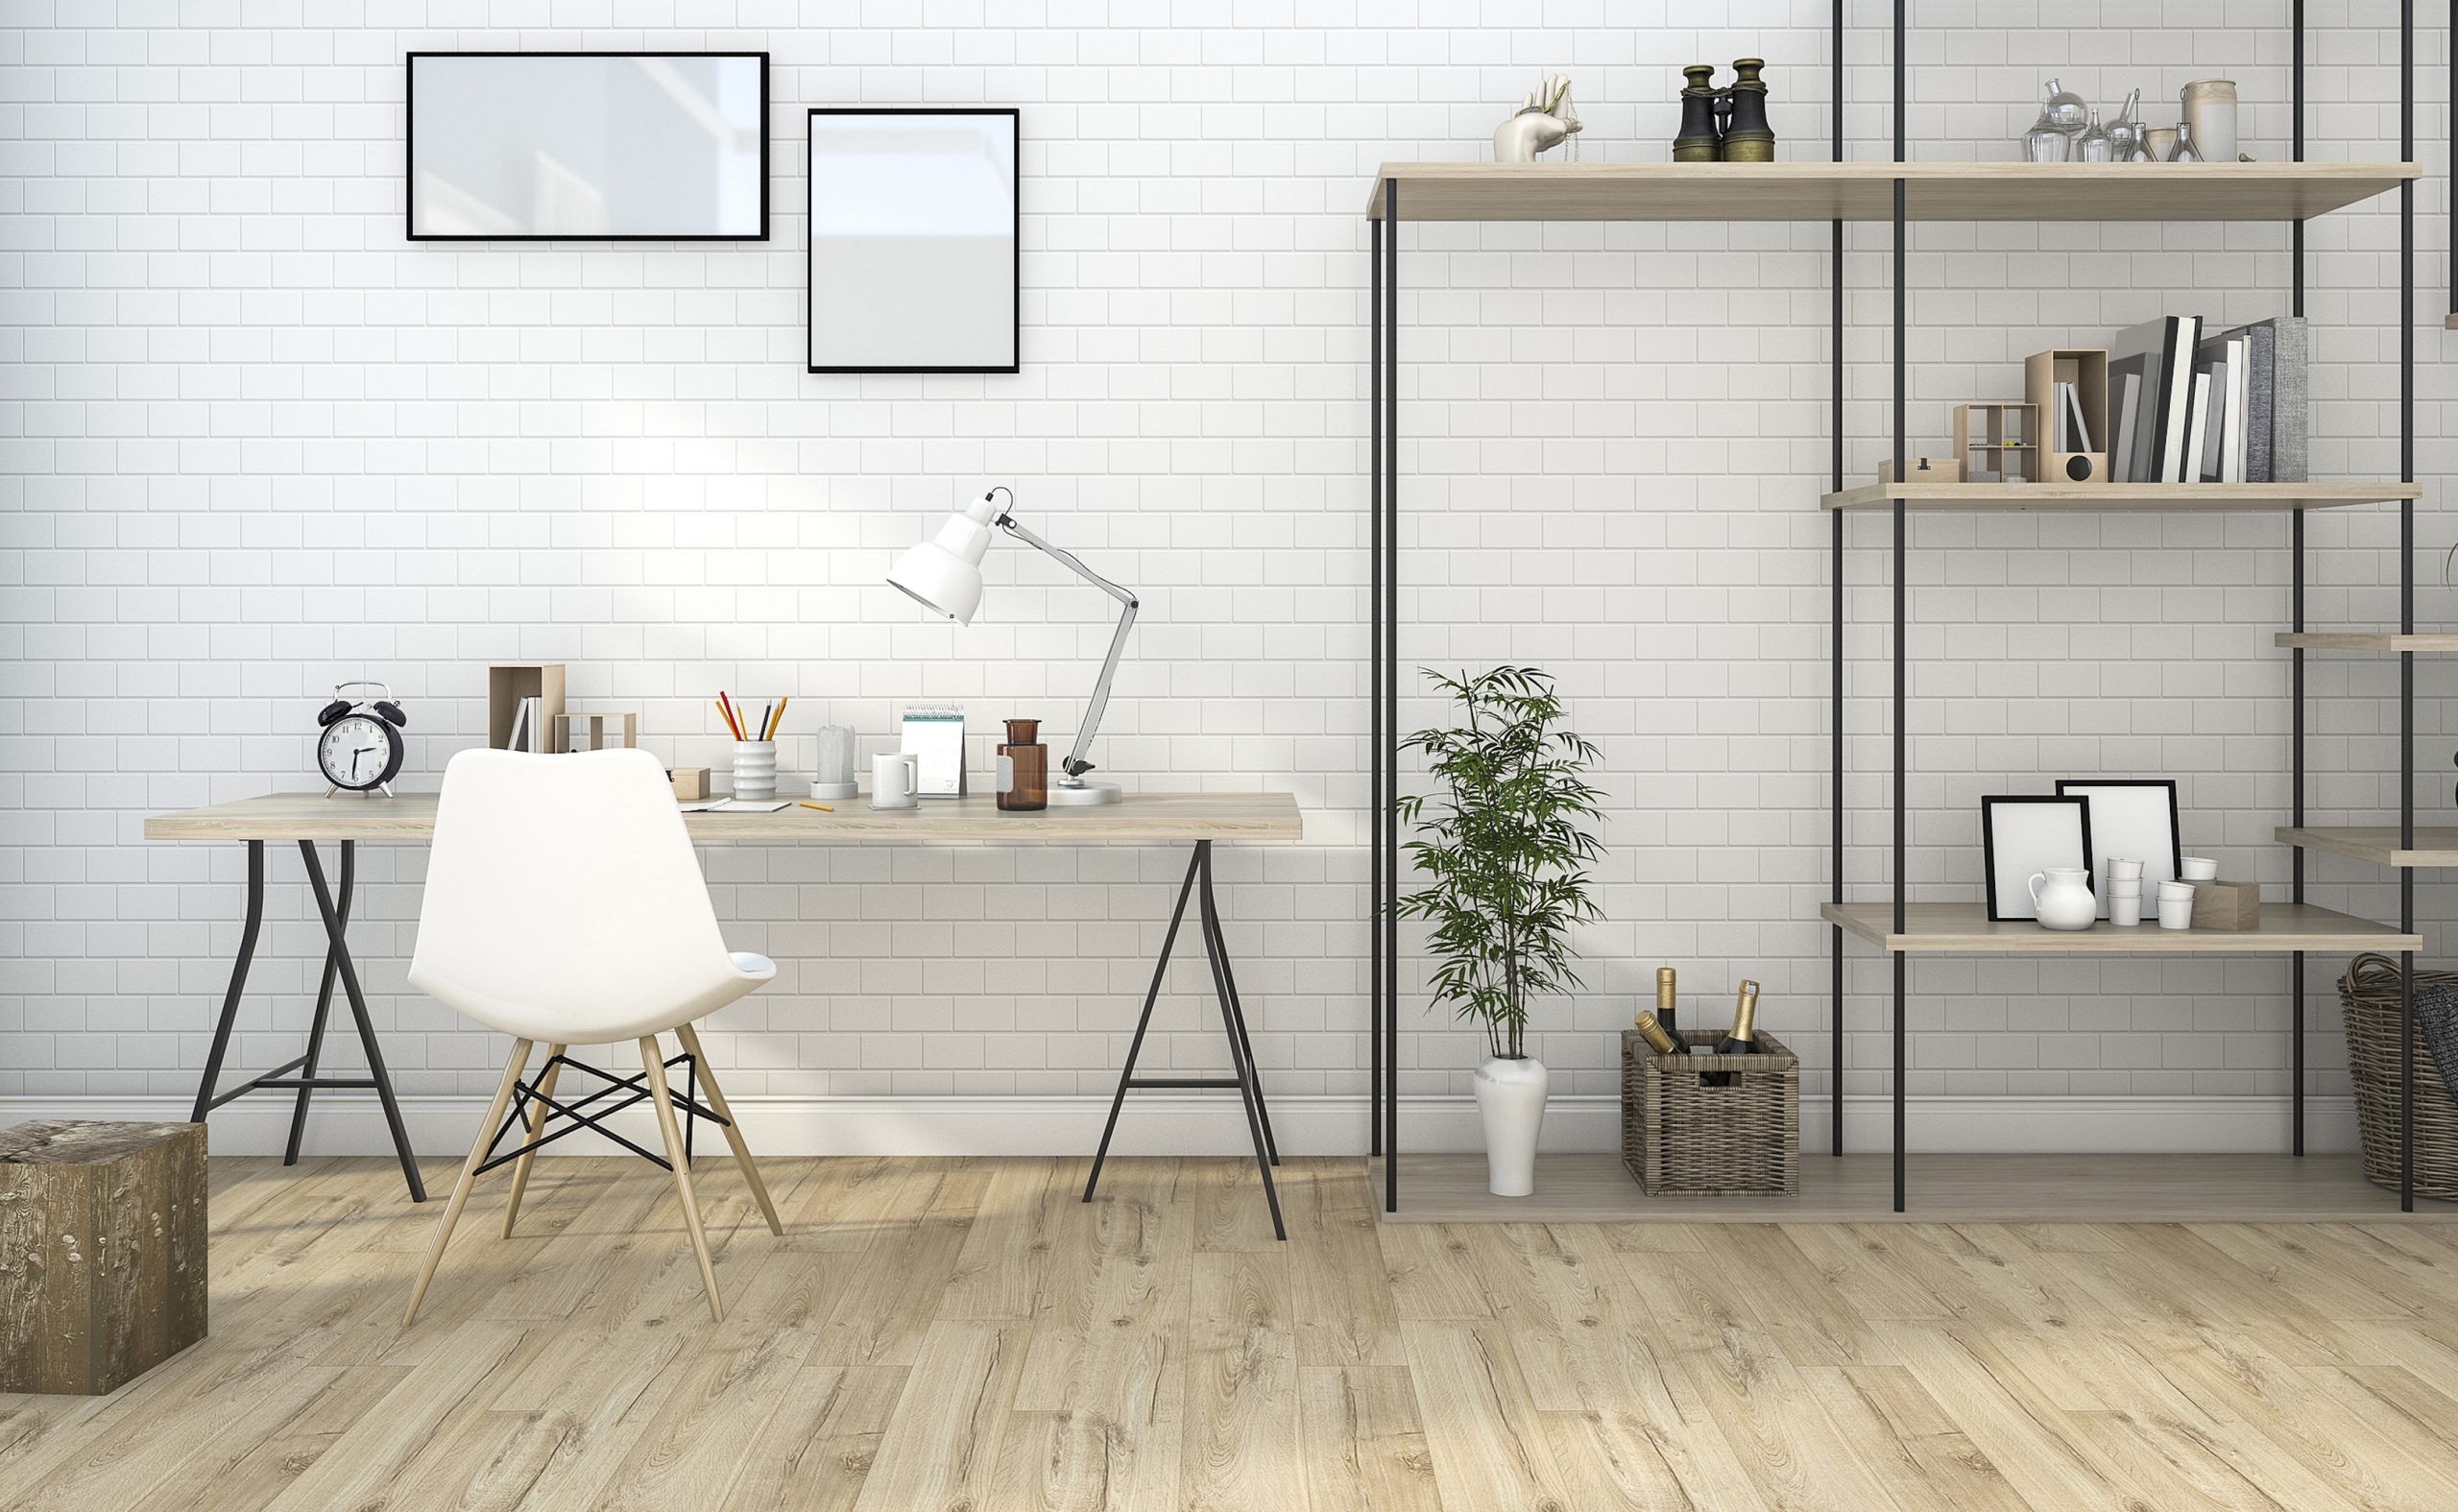 3d Rendering White Brick Living Room With Shelf De 2021 08 28 11 01 21 Utc